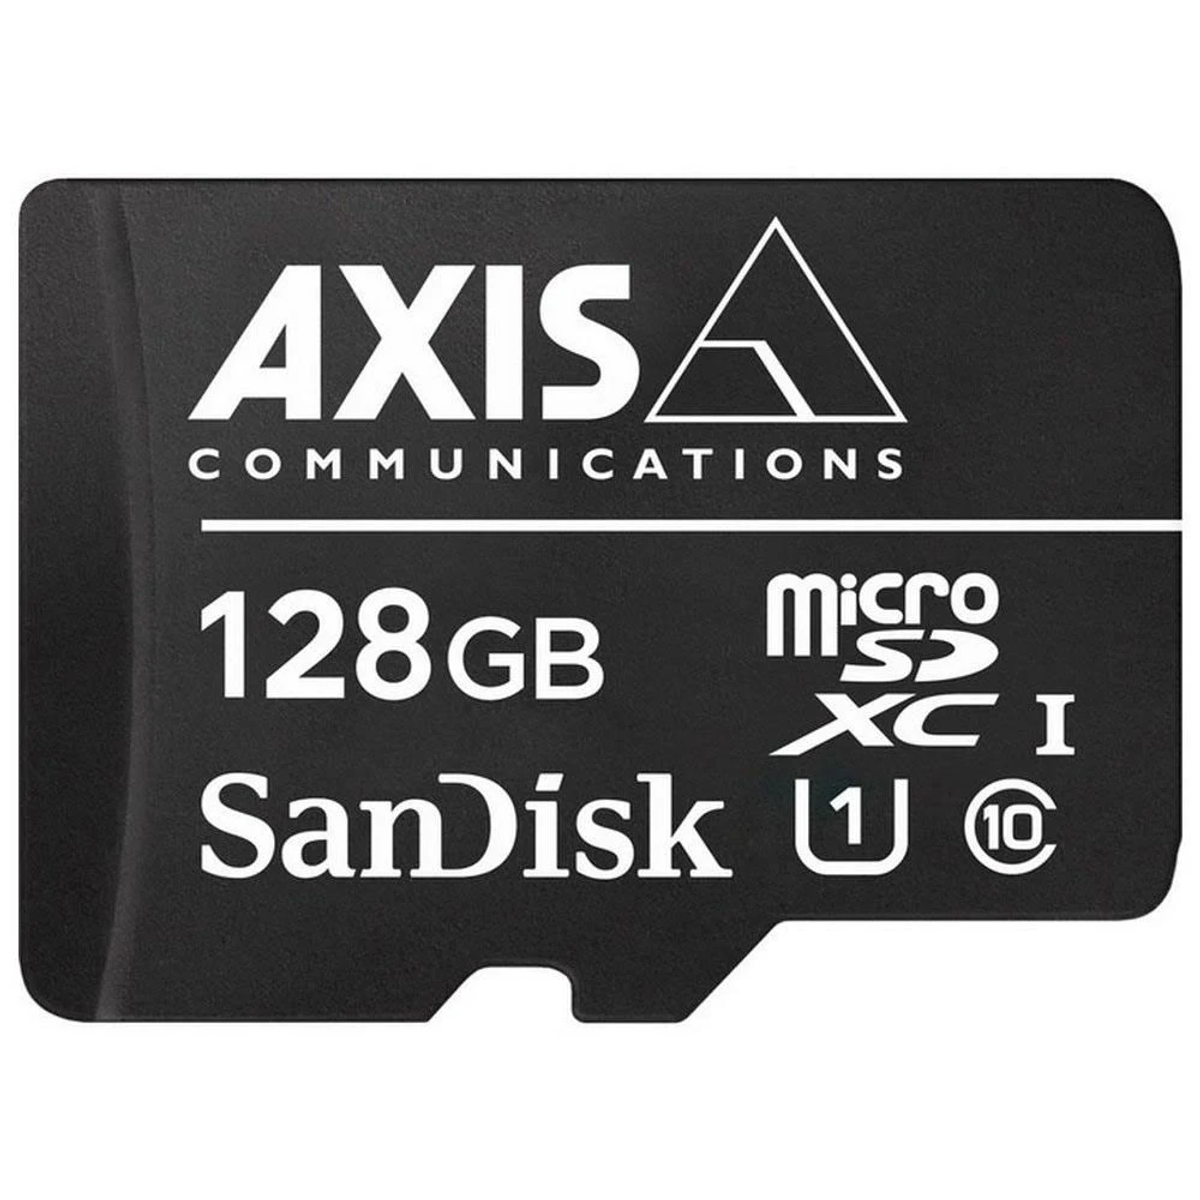 GB, SD Micro-SD, SDXC, 128 80 Surveillance, Micro-SDXC, Speicherkarte, AXIS MB/s